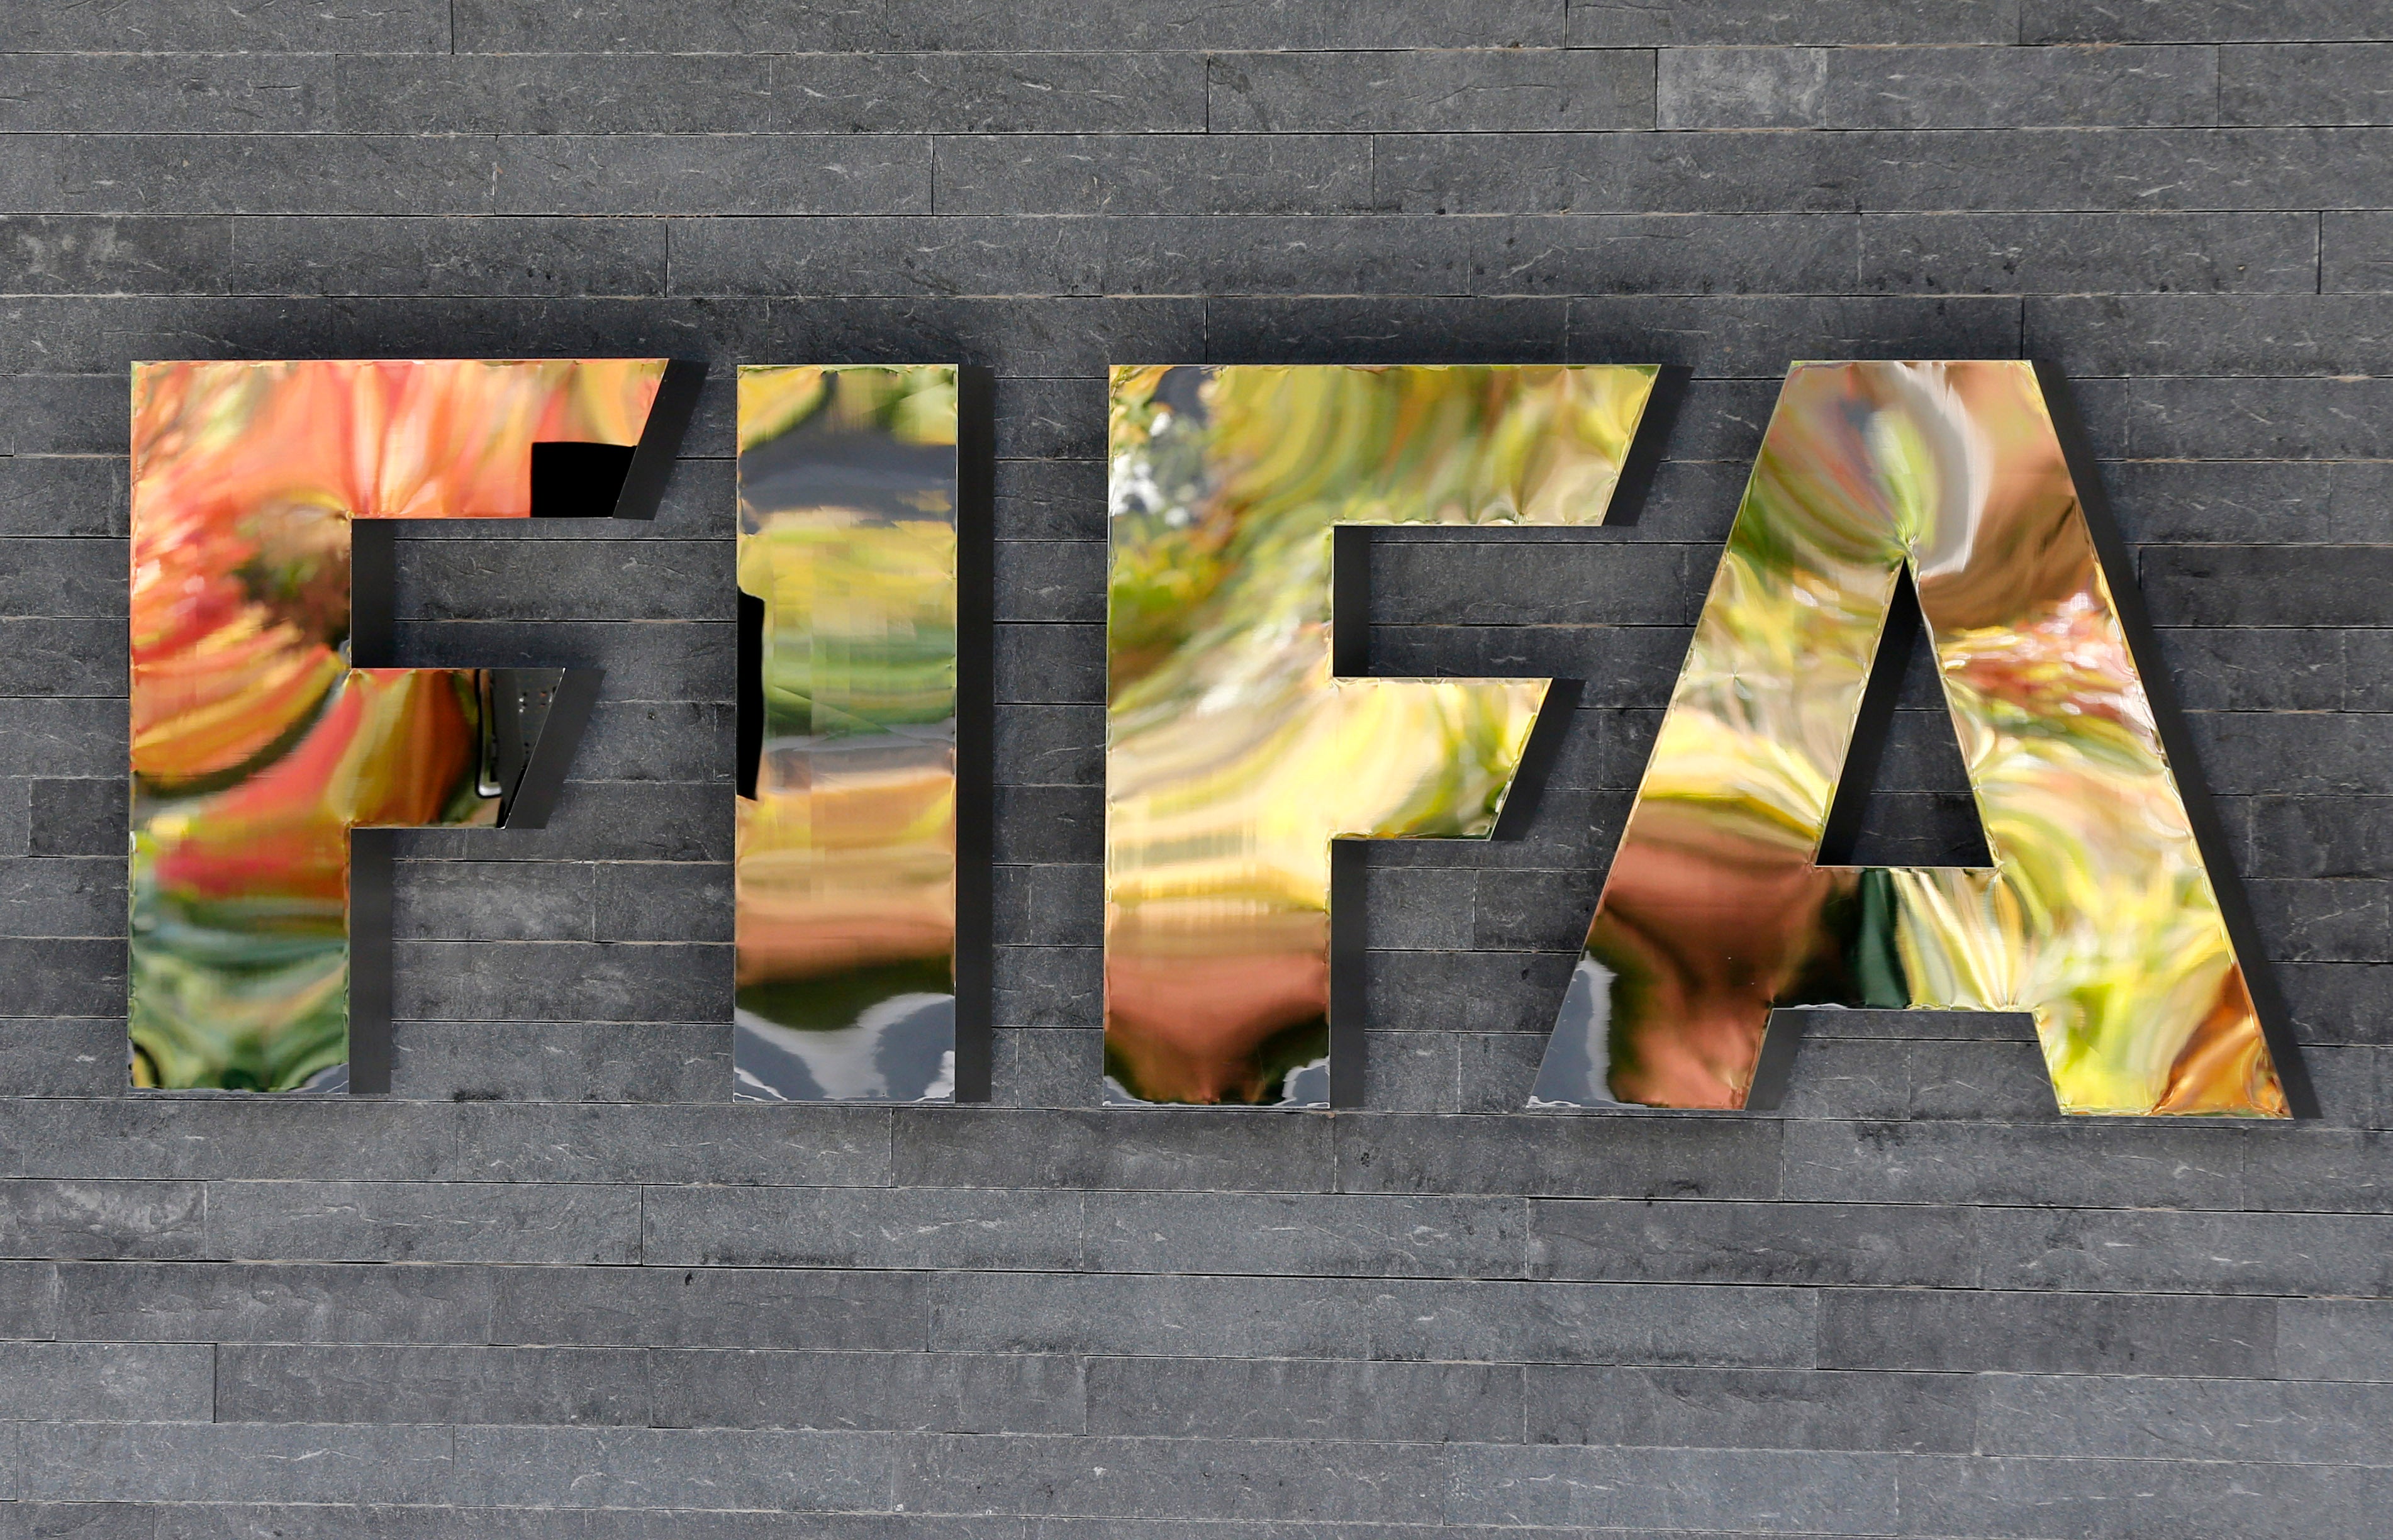 FIFA-INVESTIGACION